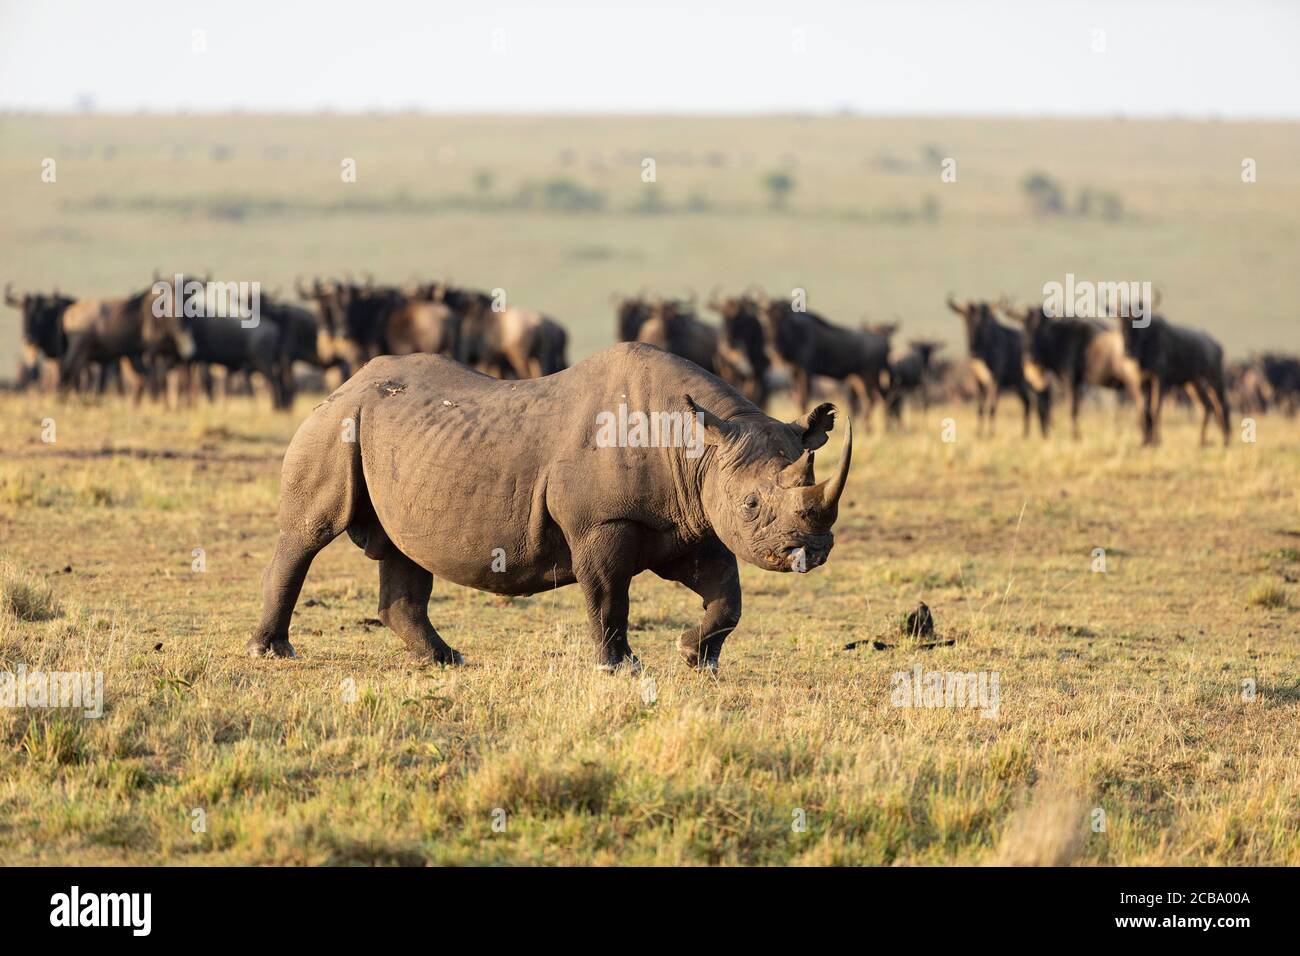 Adult black rhino with huge horn walking past wildebeest herd in golden afternoon light in Masai Mara Kenya Stock Photo